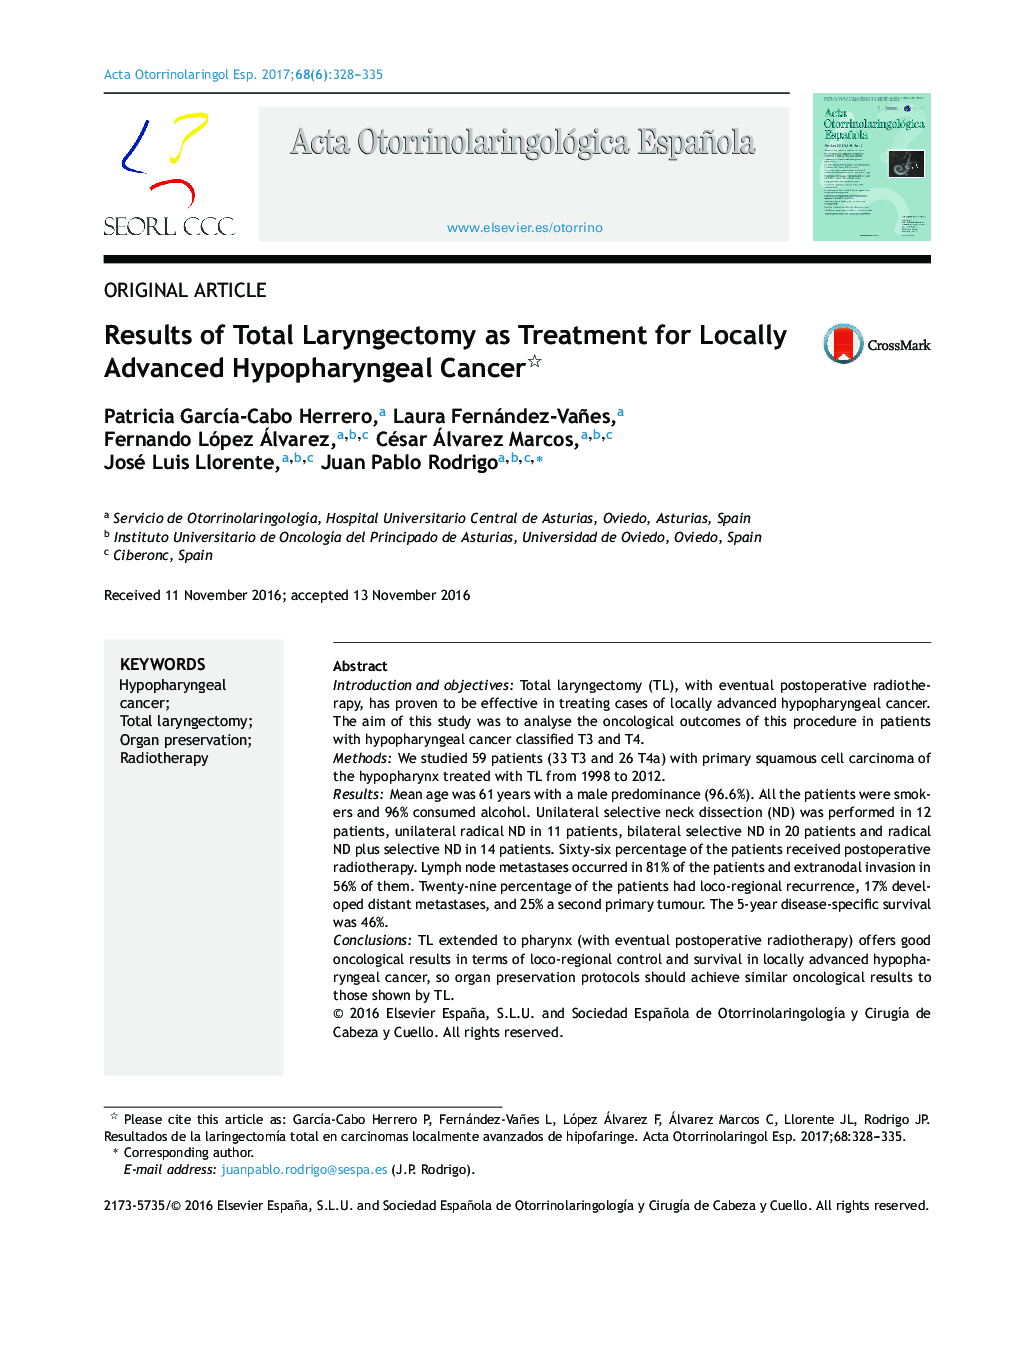 نتایج کل لارنگکتومی به عنوان درمان سرطان هیپوفارنکس پیشرفته محلی 